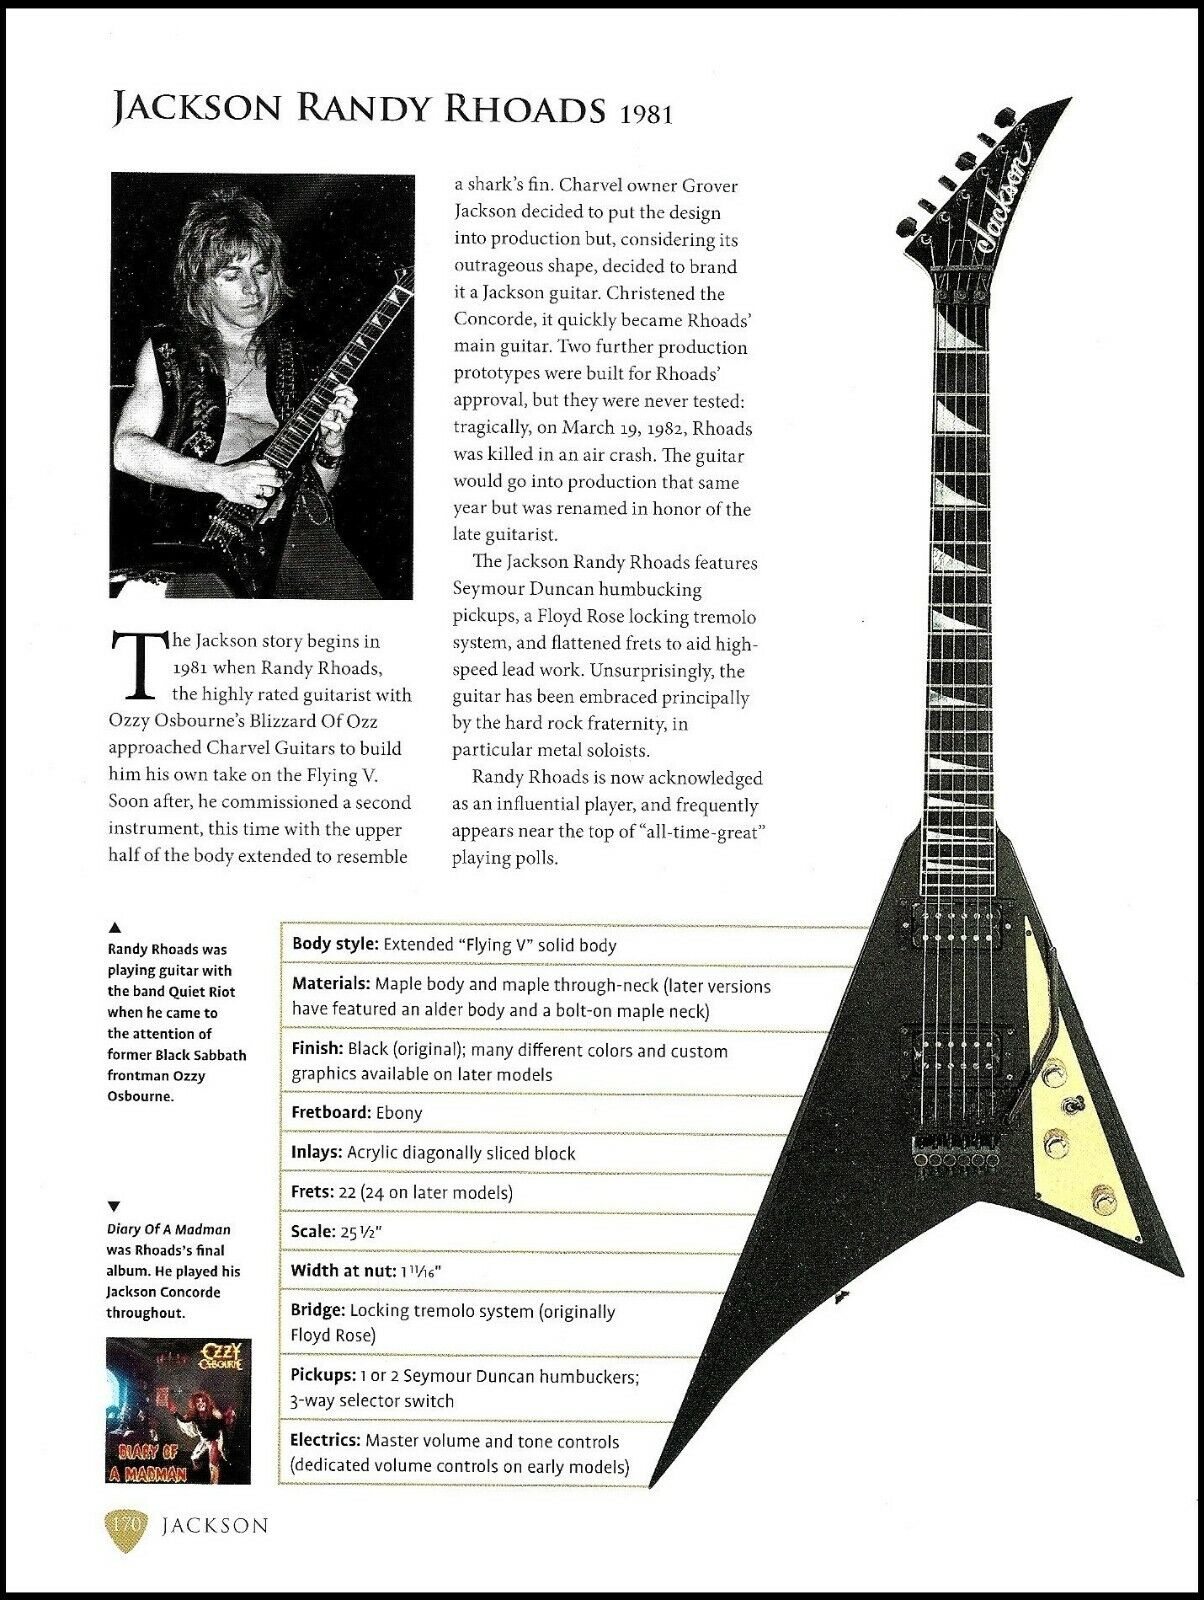 The 1981 Jackson Randy Rhoads guitar history article + family tree 6 x 8 print